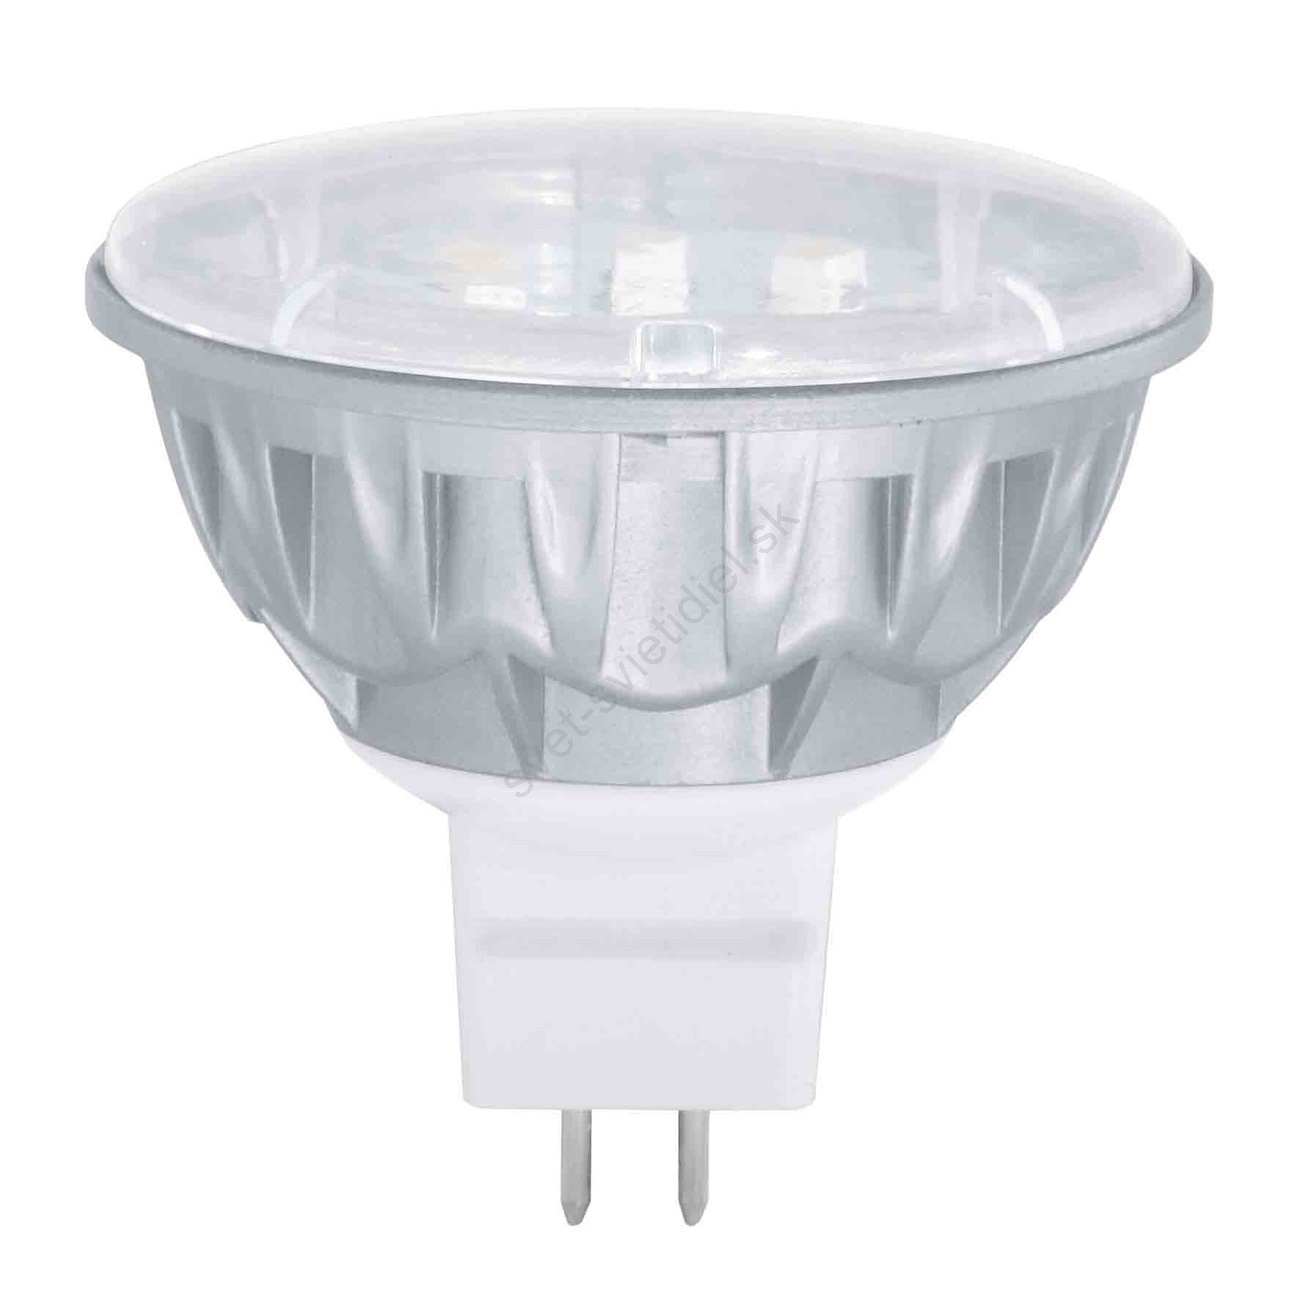 Лампа светодиодная 5.3 12v. Лампа светодиодная 5.5w, gu5.3. Gu 5.3 3000k 12v. Лампа цоколь gu5.3. Gu5.3 светодиодная лампа рефлектор.